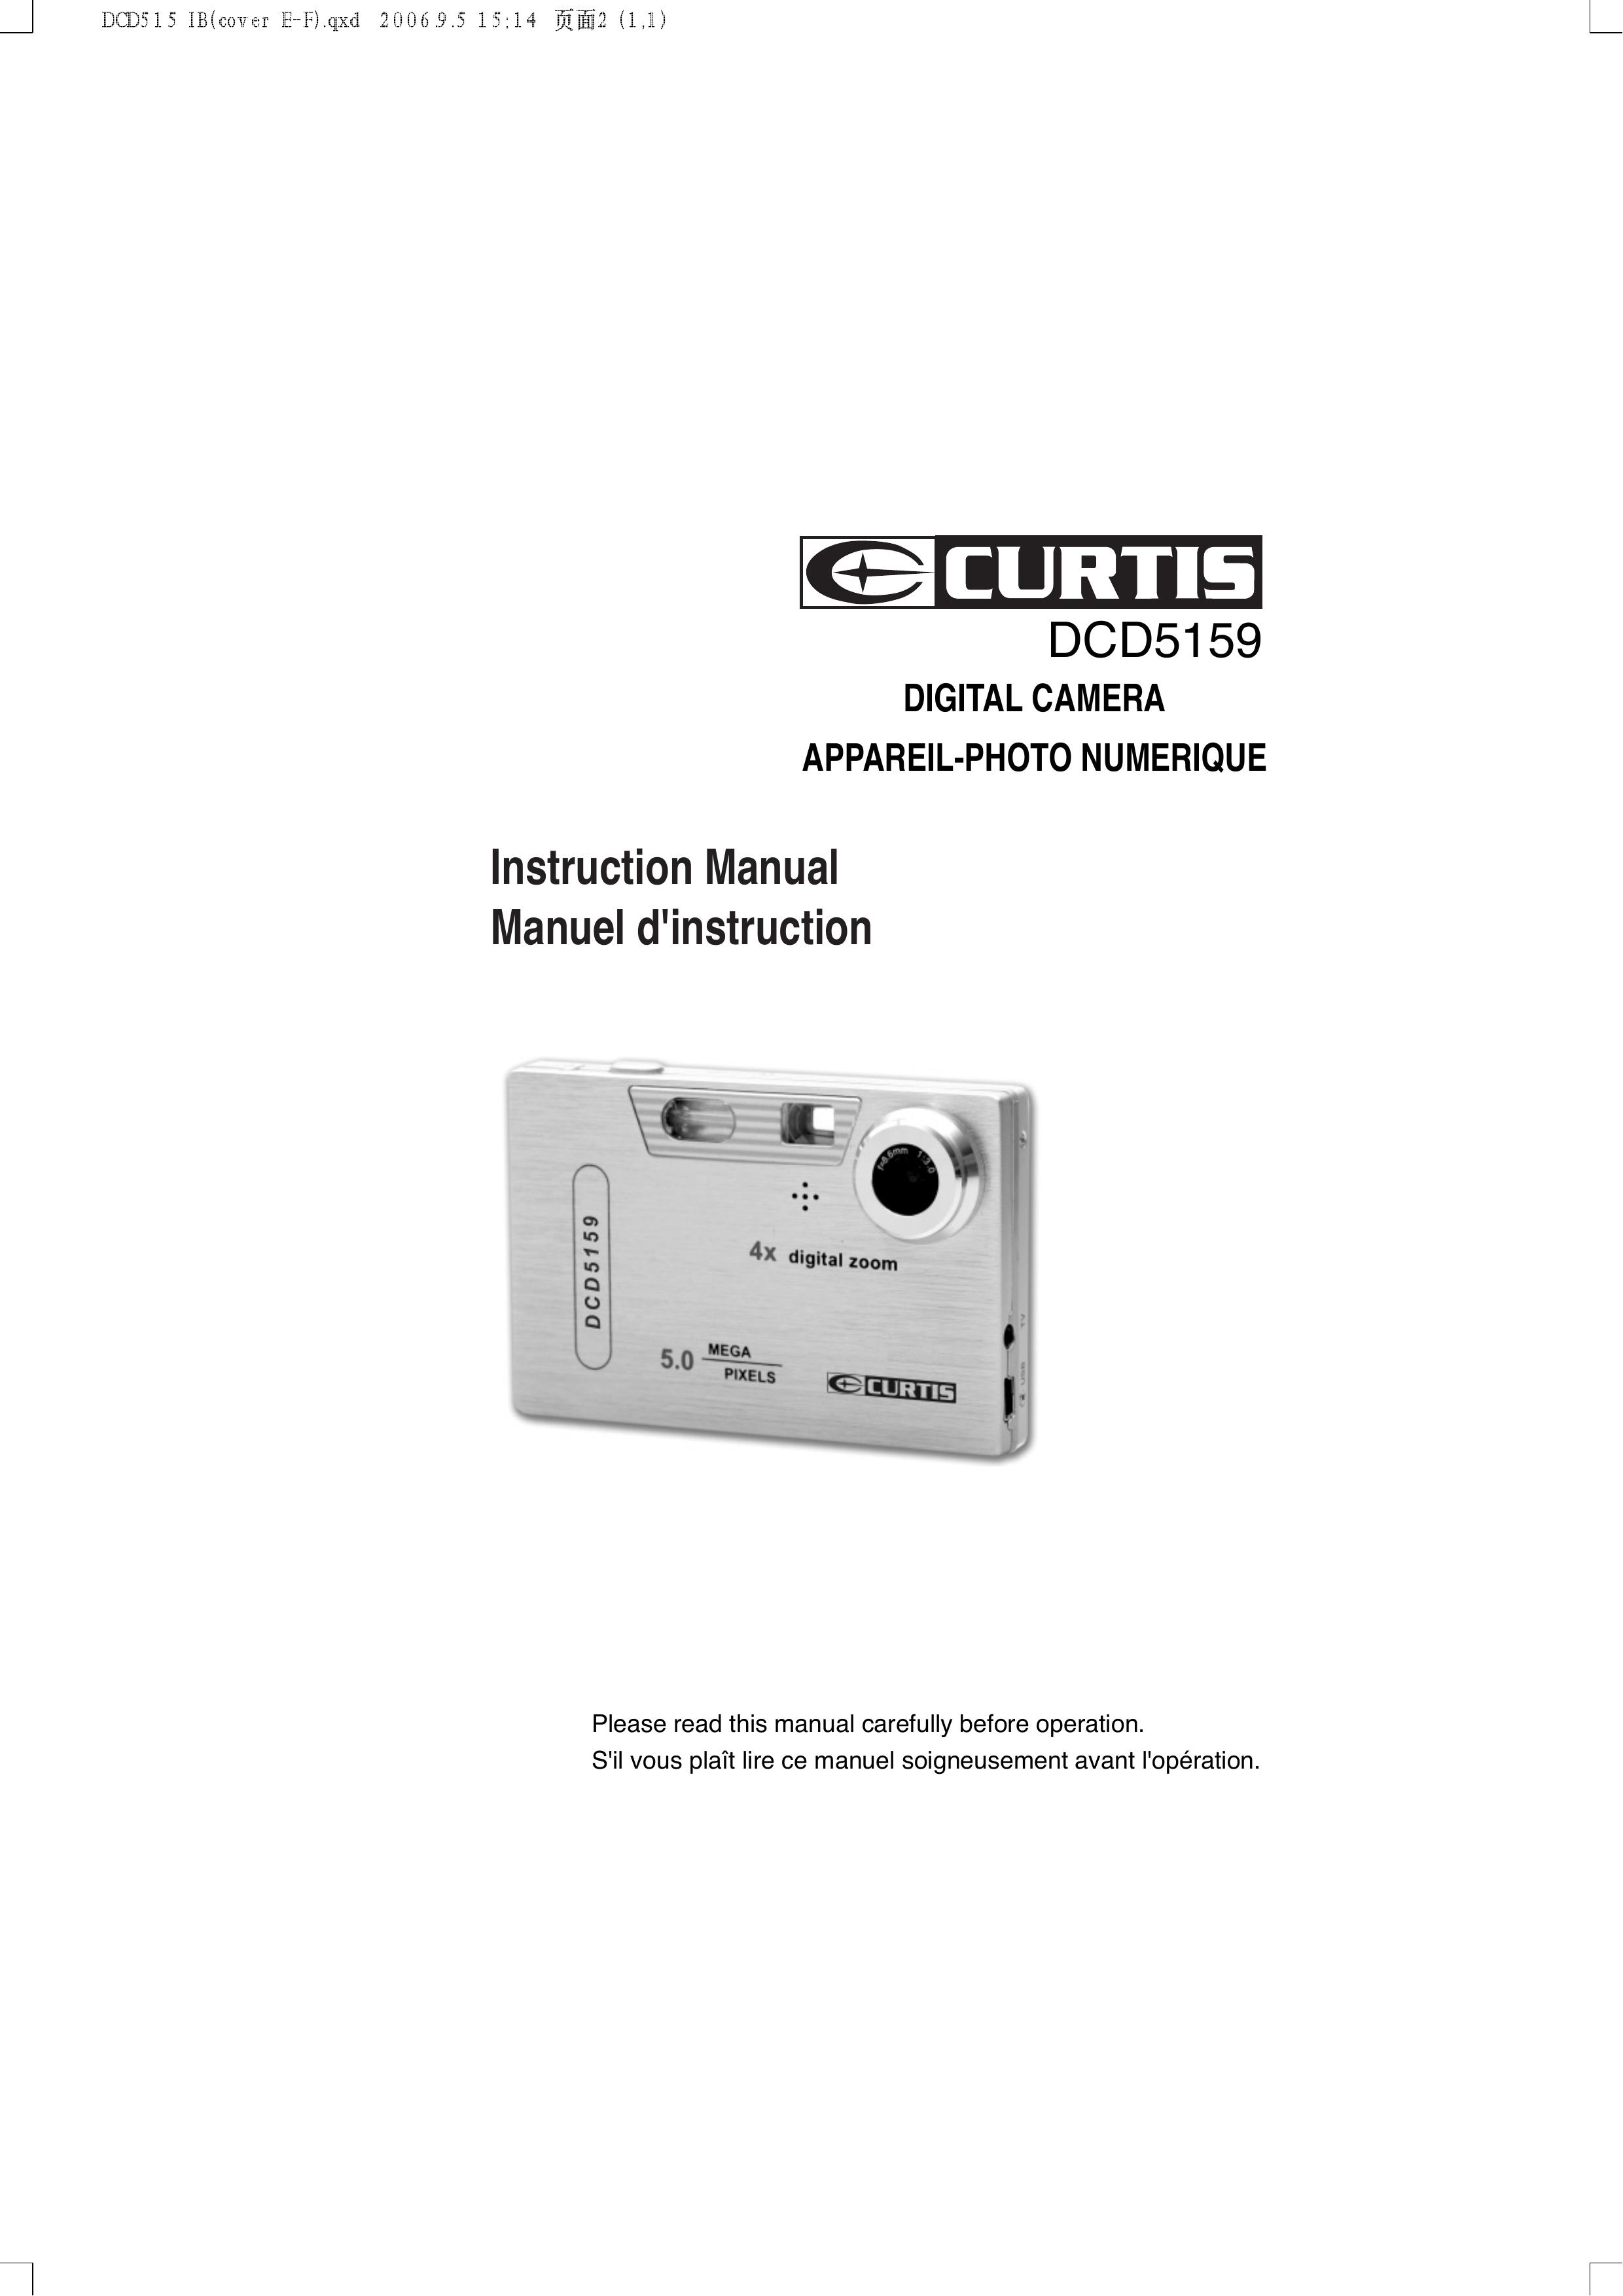 Curtis DCD5159 Digital Camera User Manual